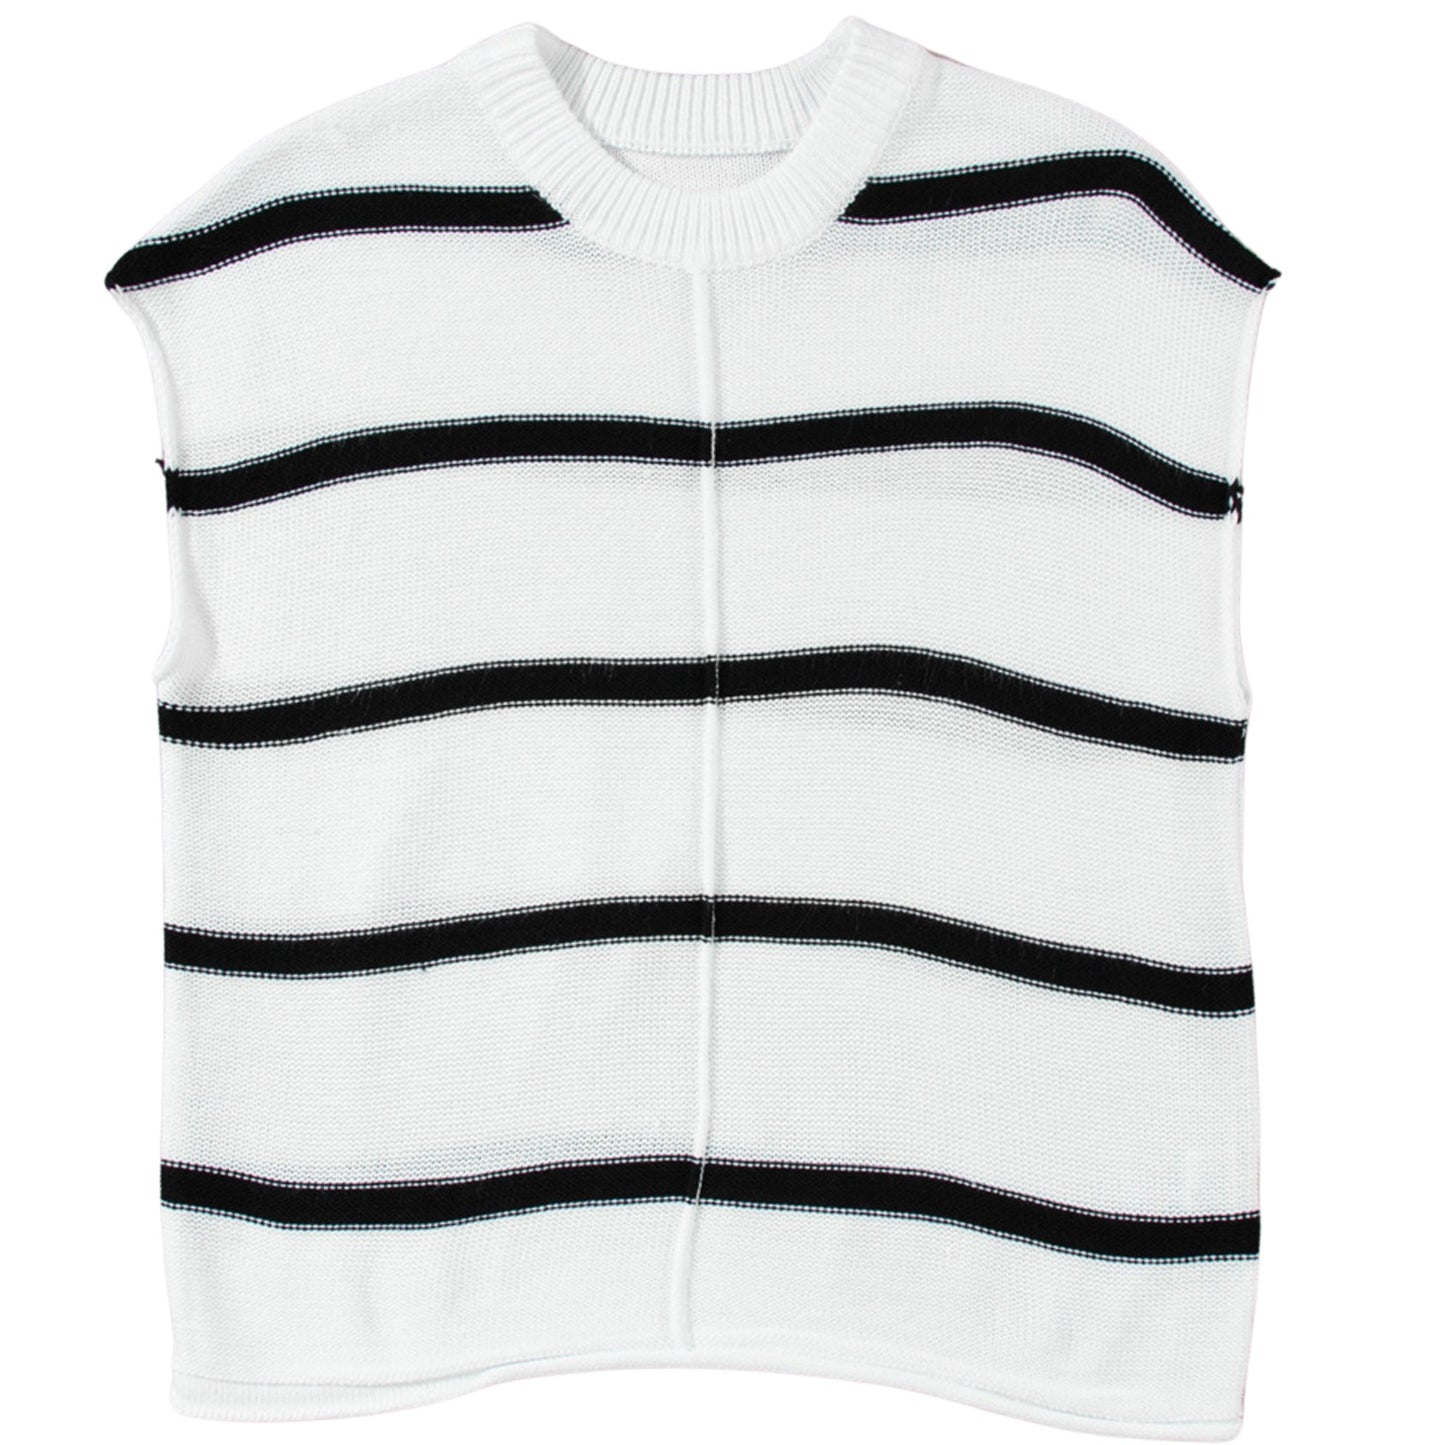 White Striped Batwing Sleeve Sweater Tee - Lavish life LLC 